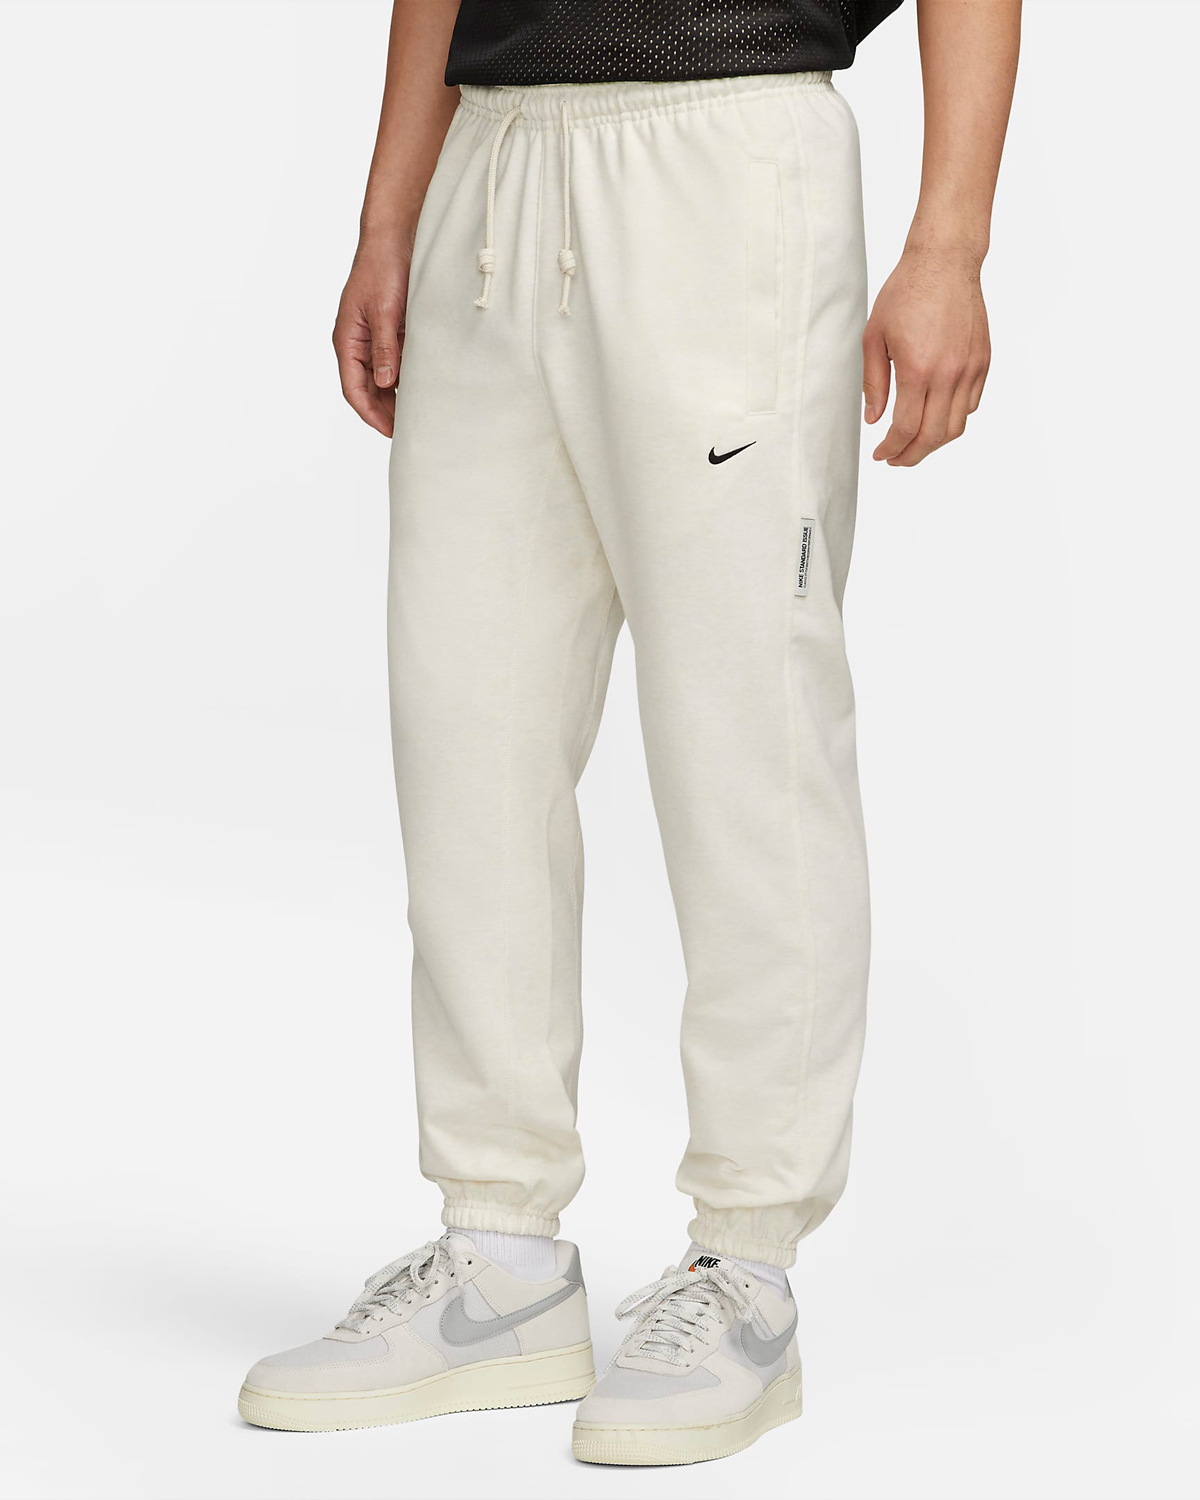 Nike-Standard-Issue-Basketball-Pants-Phantom